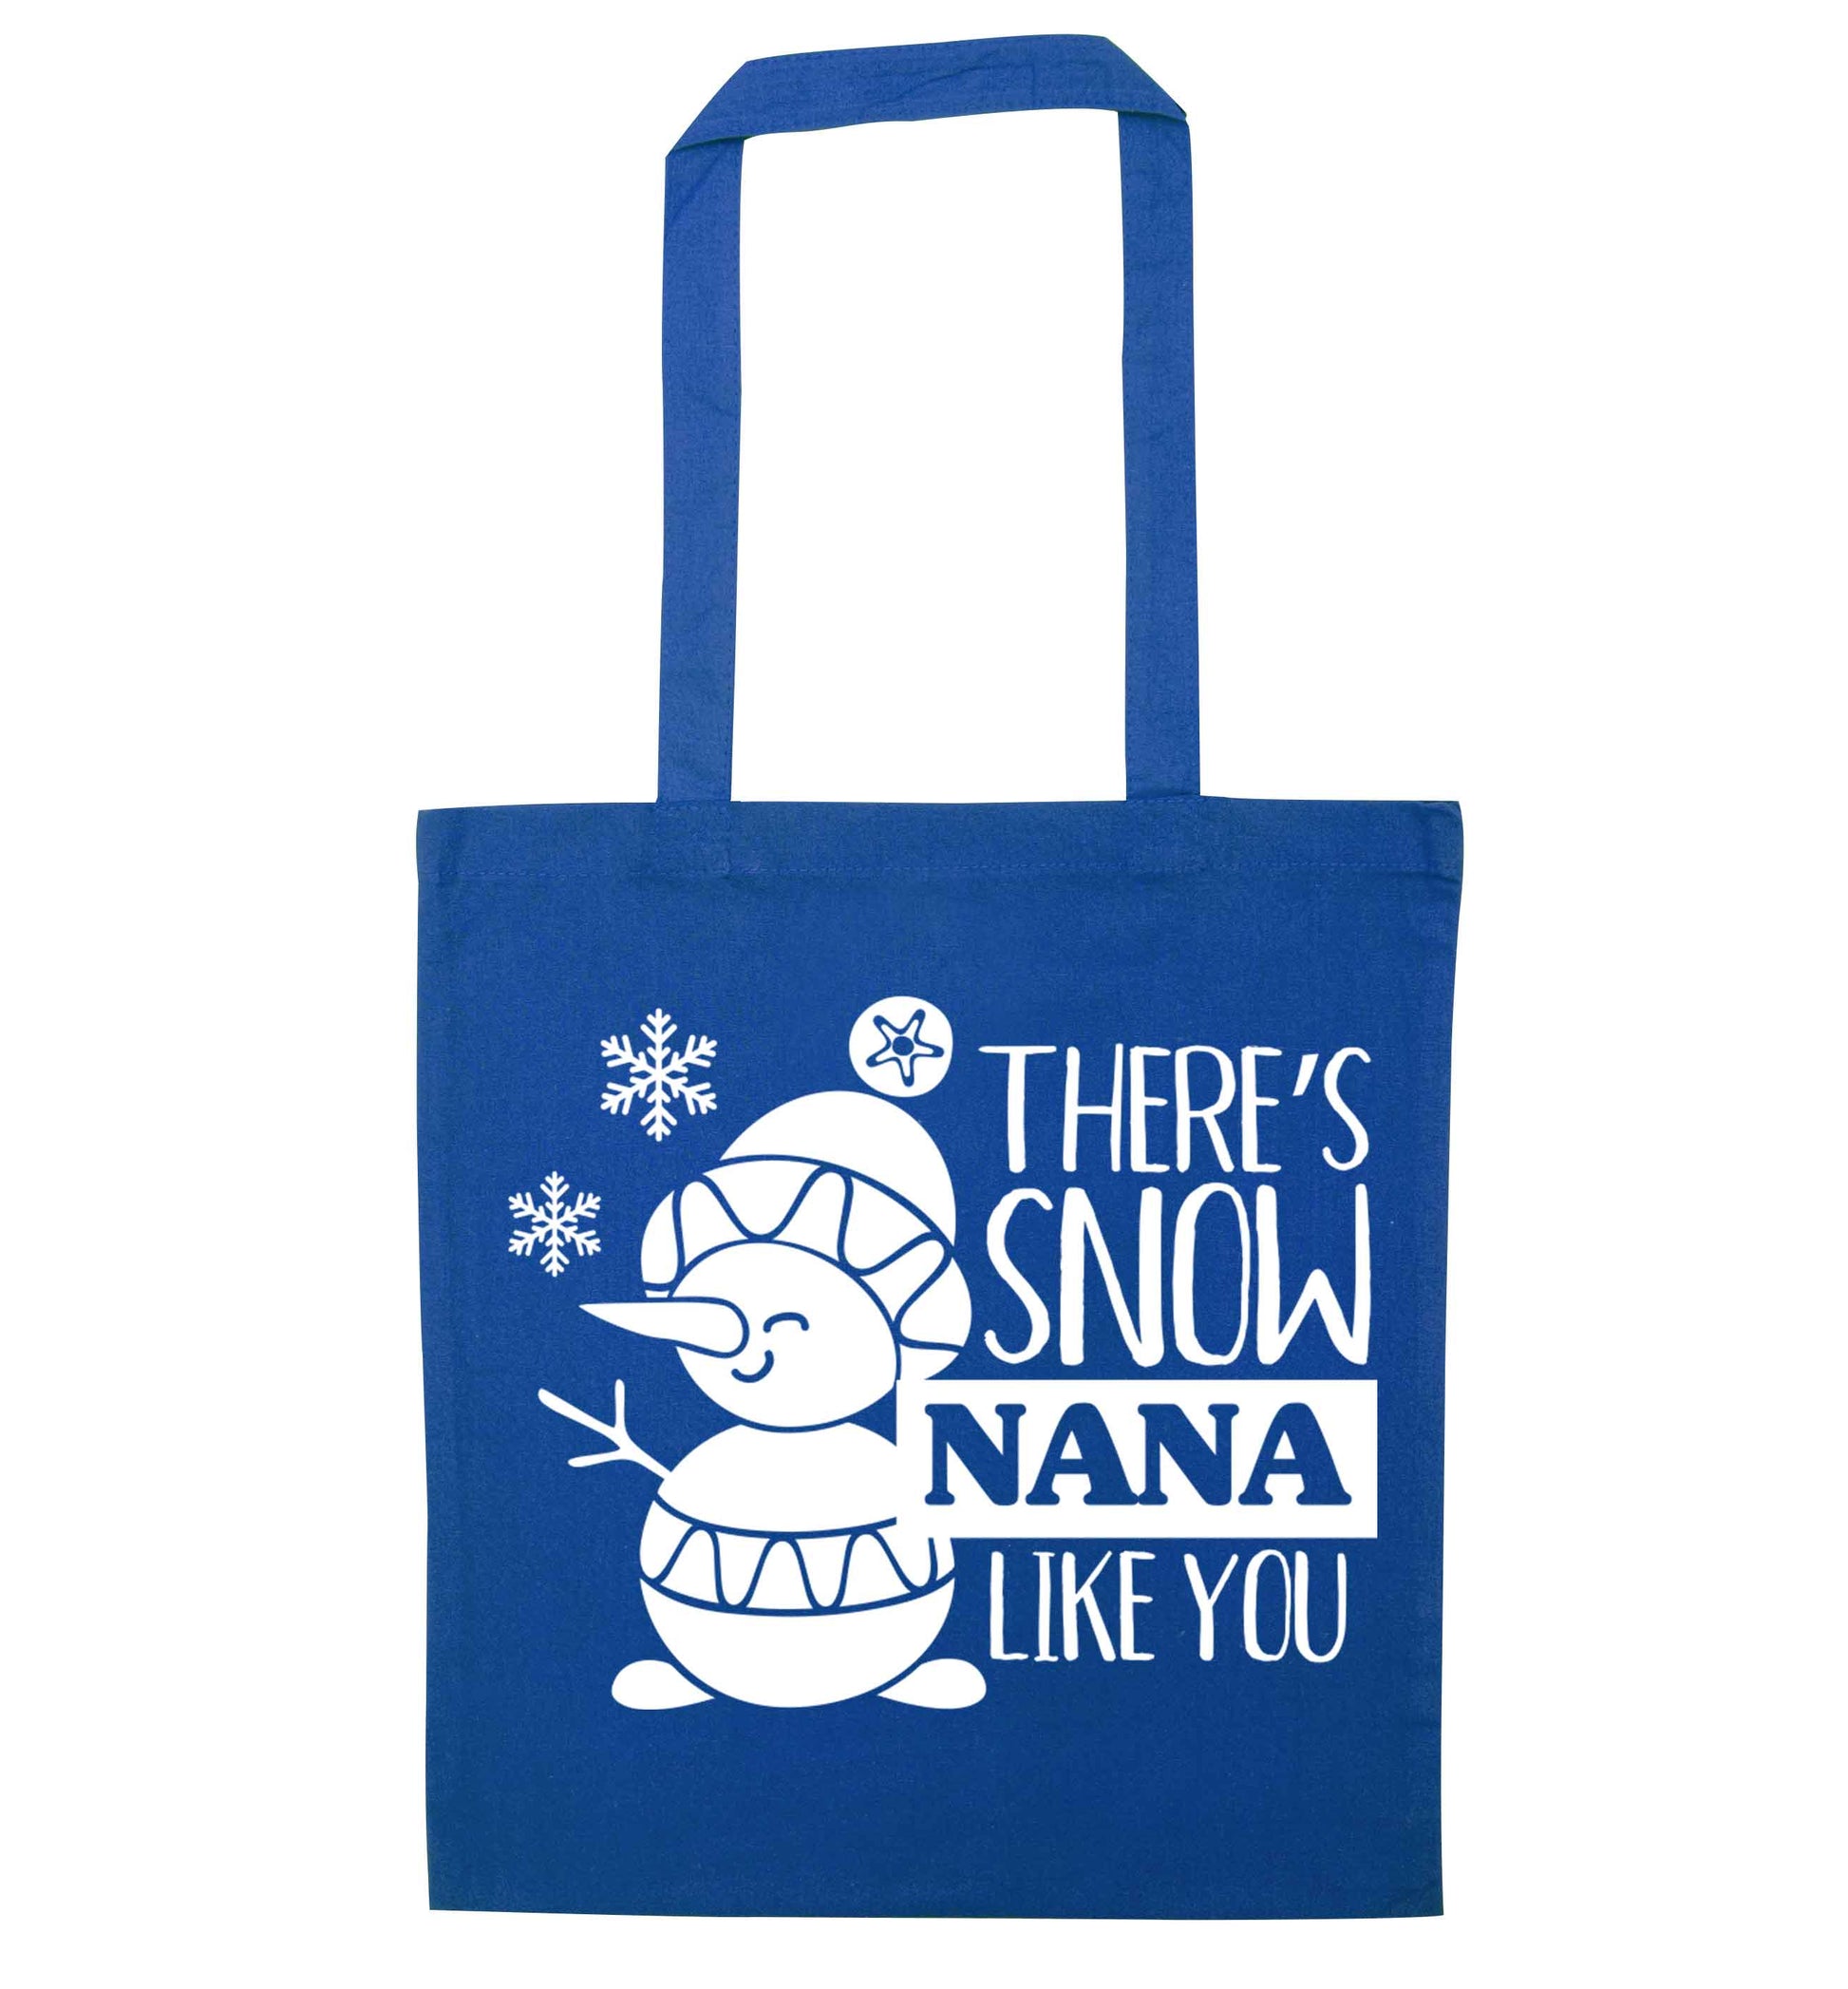 There's snow nana like you blue tote bag